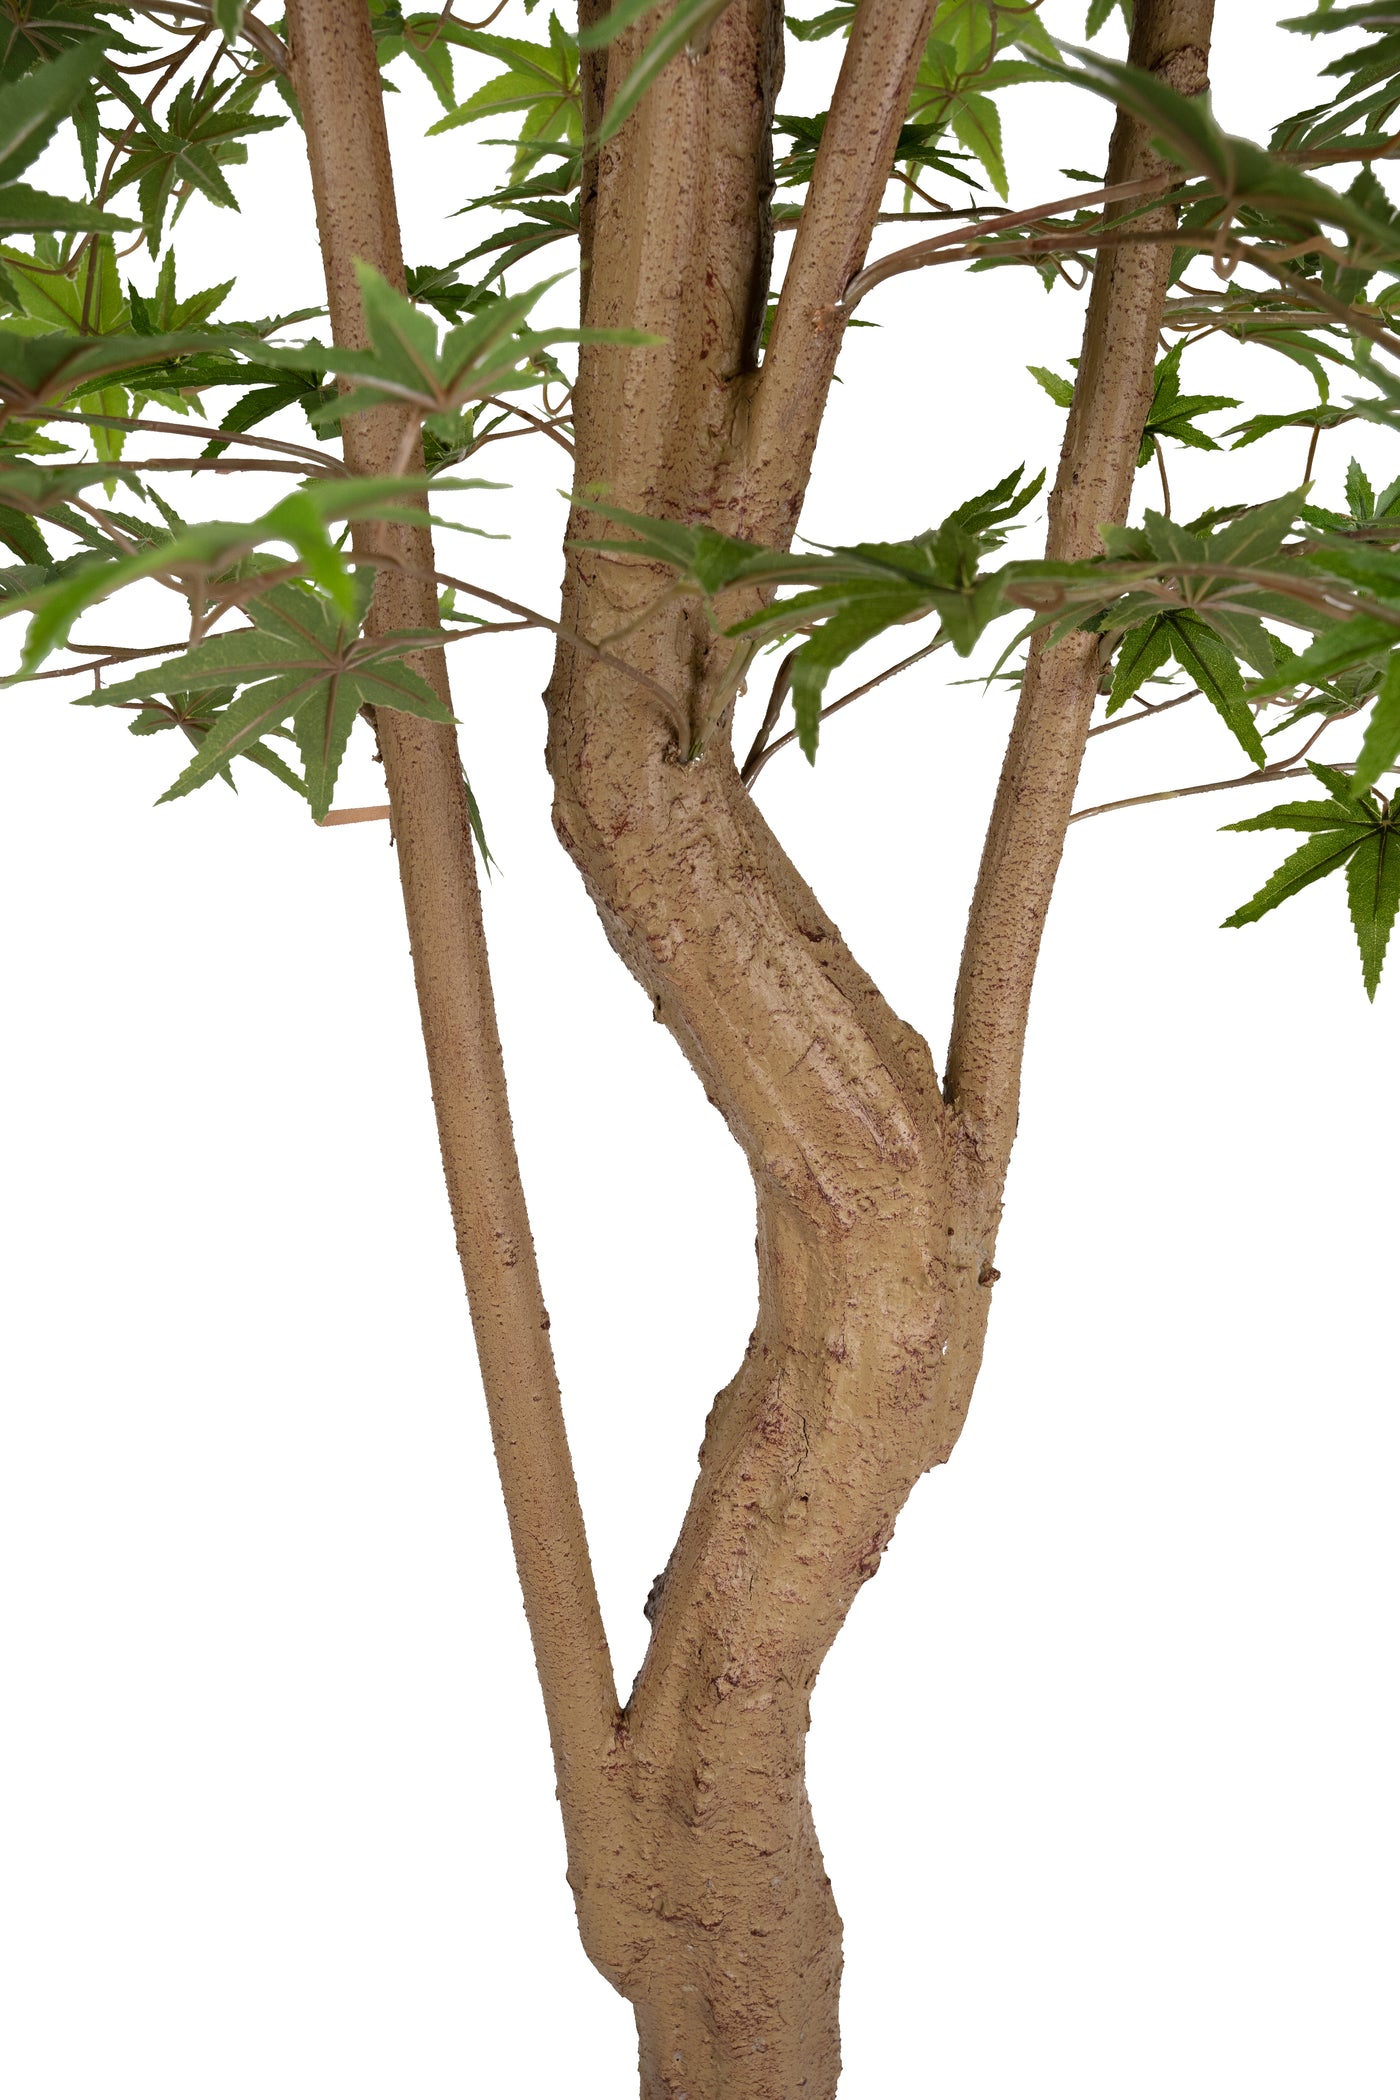 Copac artificial H210cm Artar cu 720 frunze